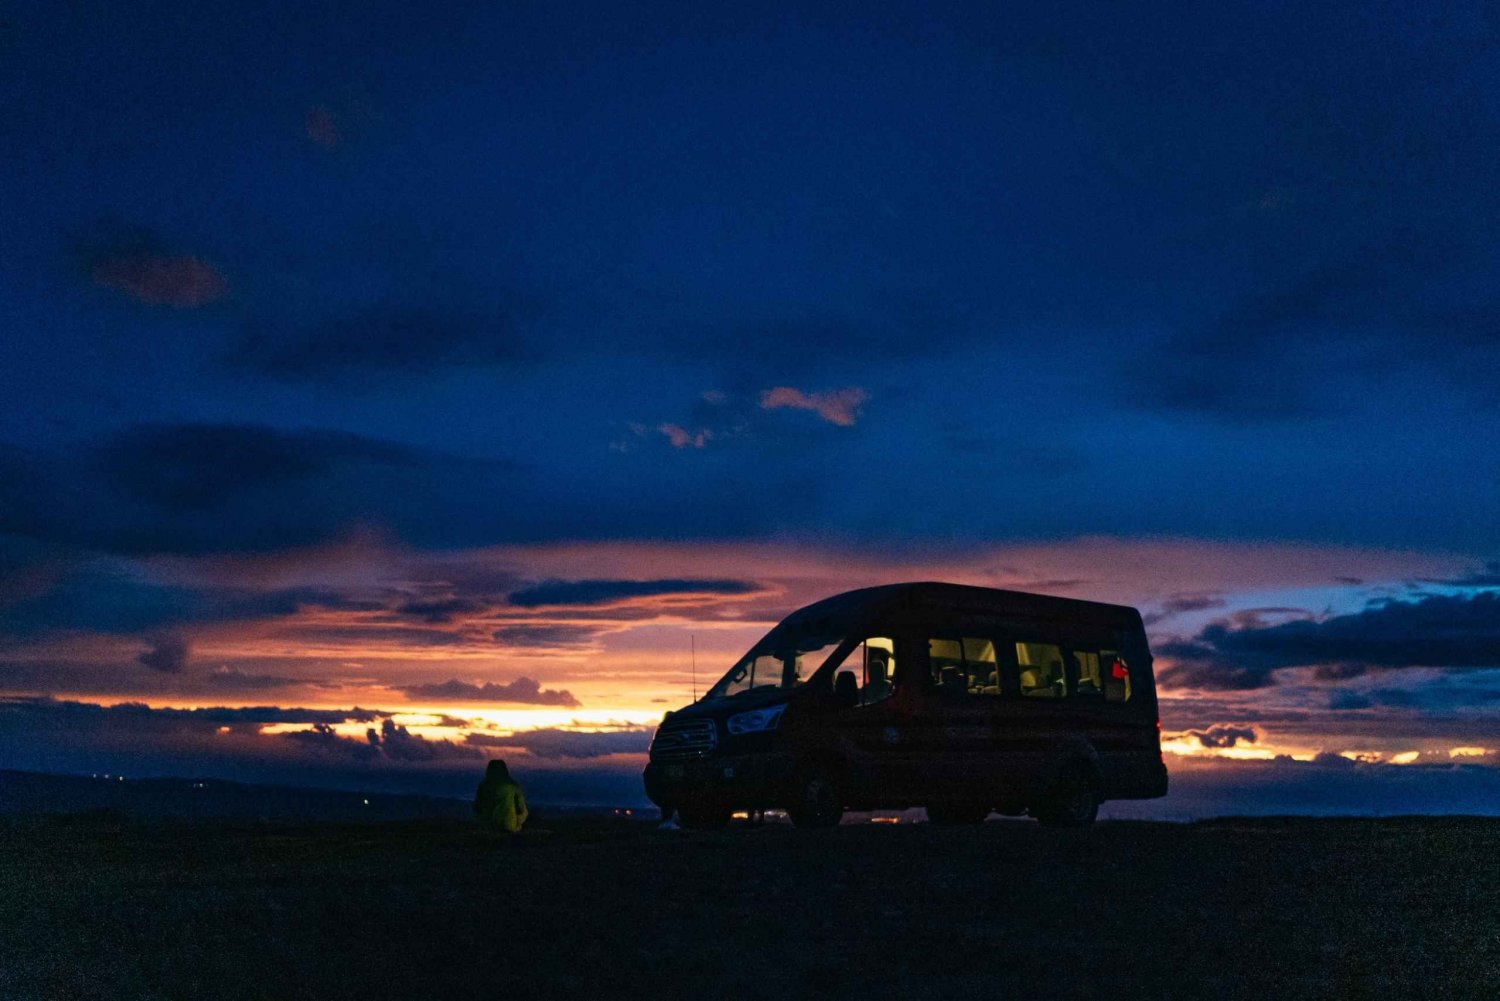 Mauna Kea: Stellar Explorer Tour from Hilo